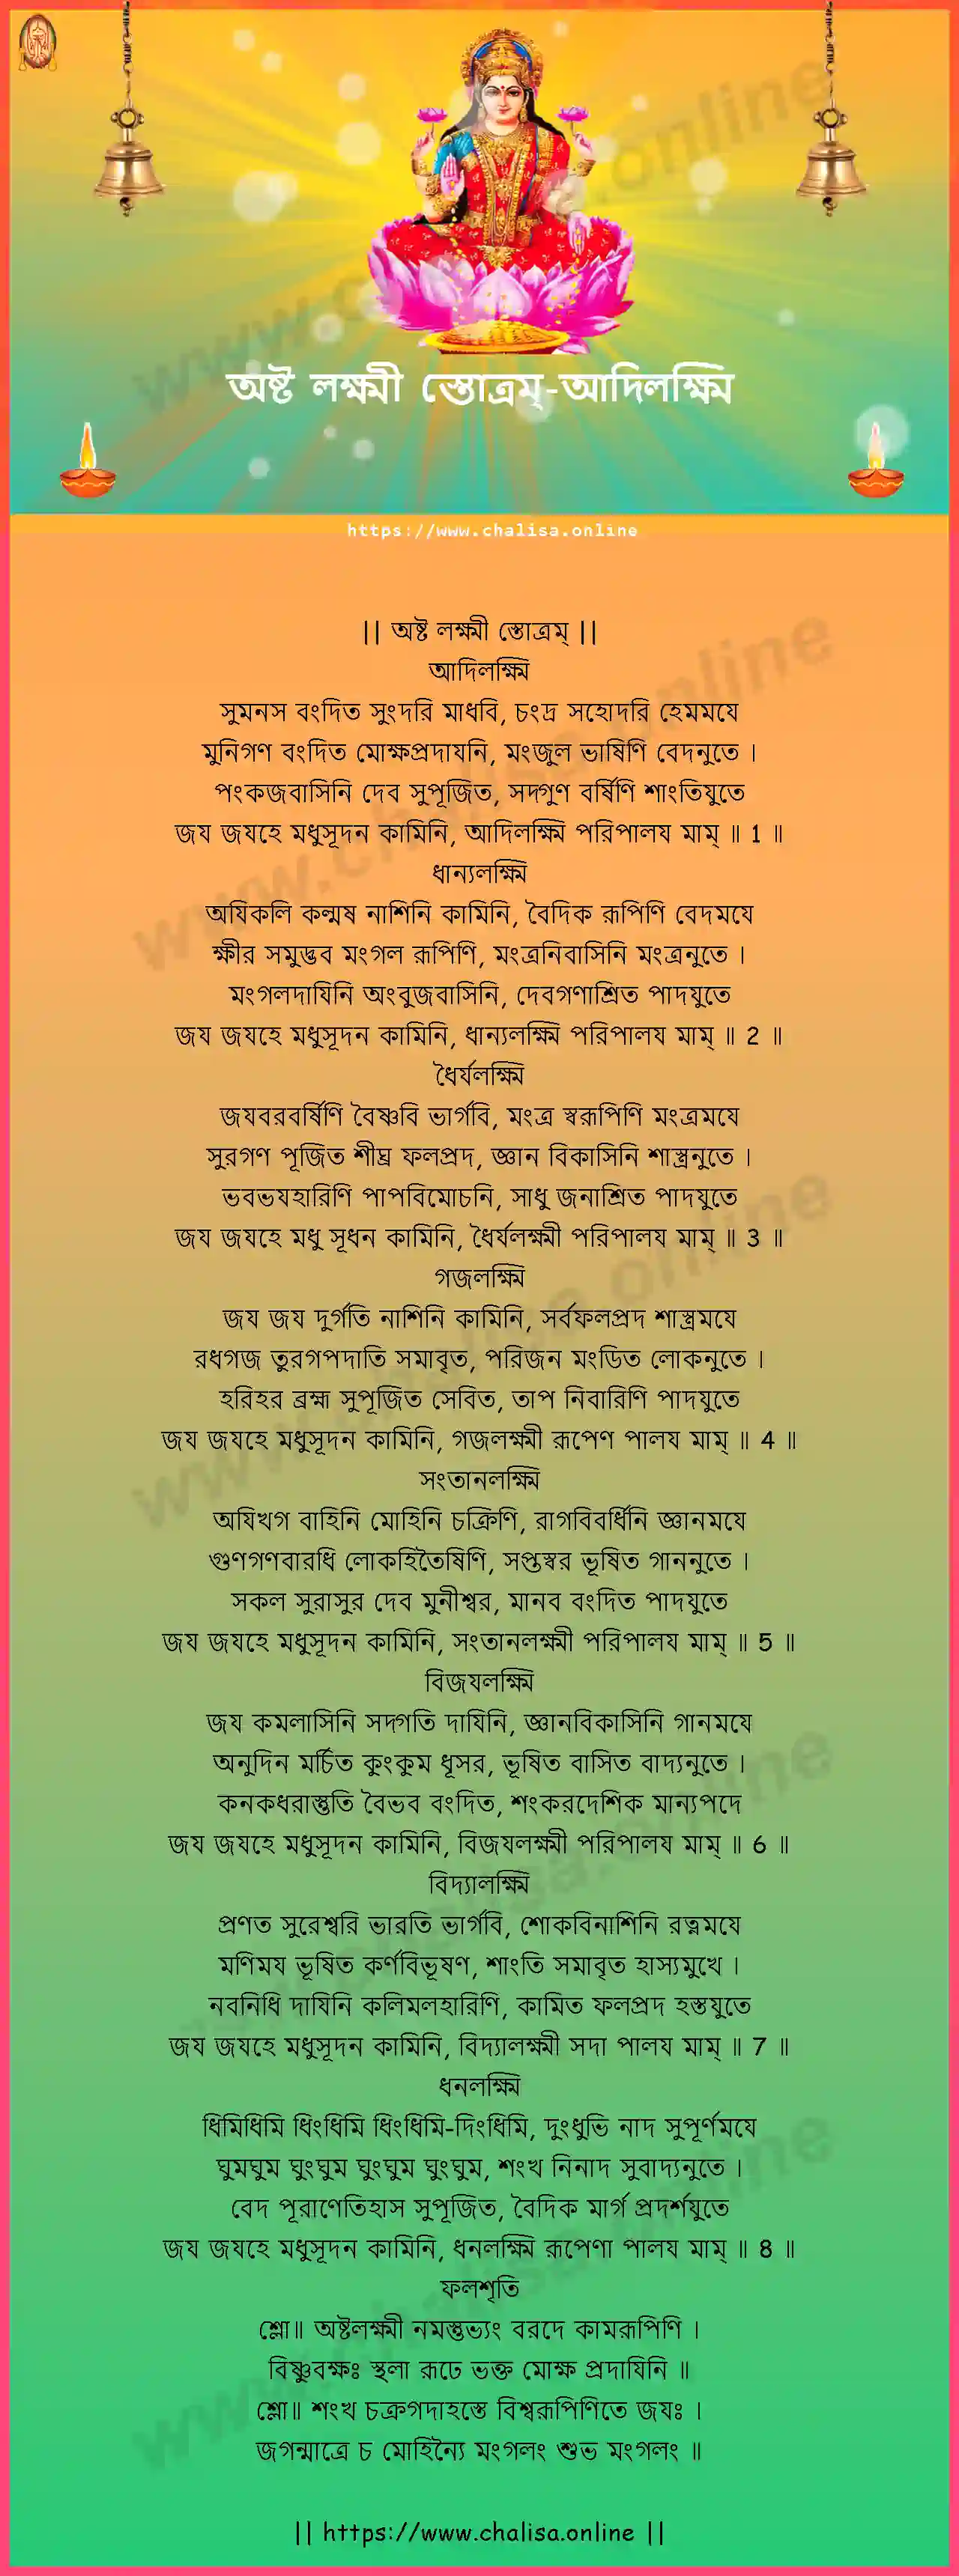 adilaksmi-ashta-lakshmi-stotram-bengali-bengali-lyrics-download